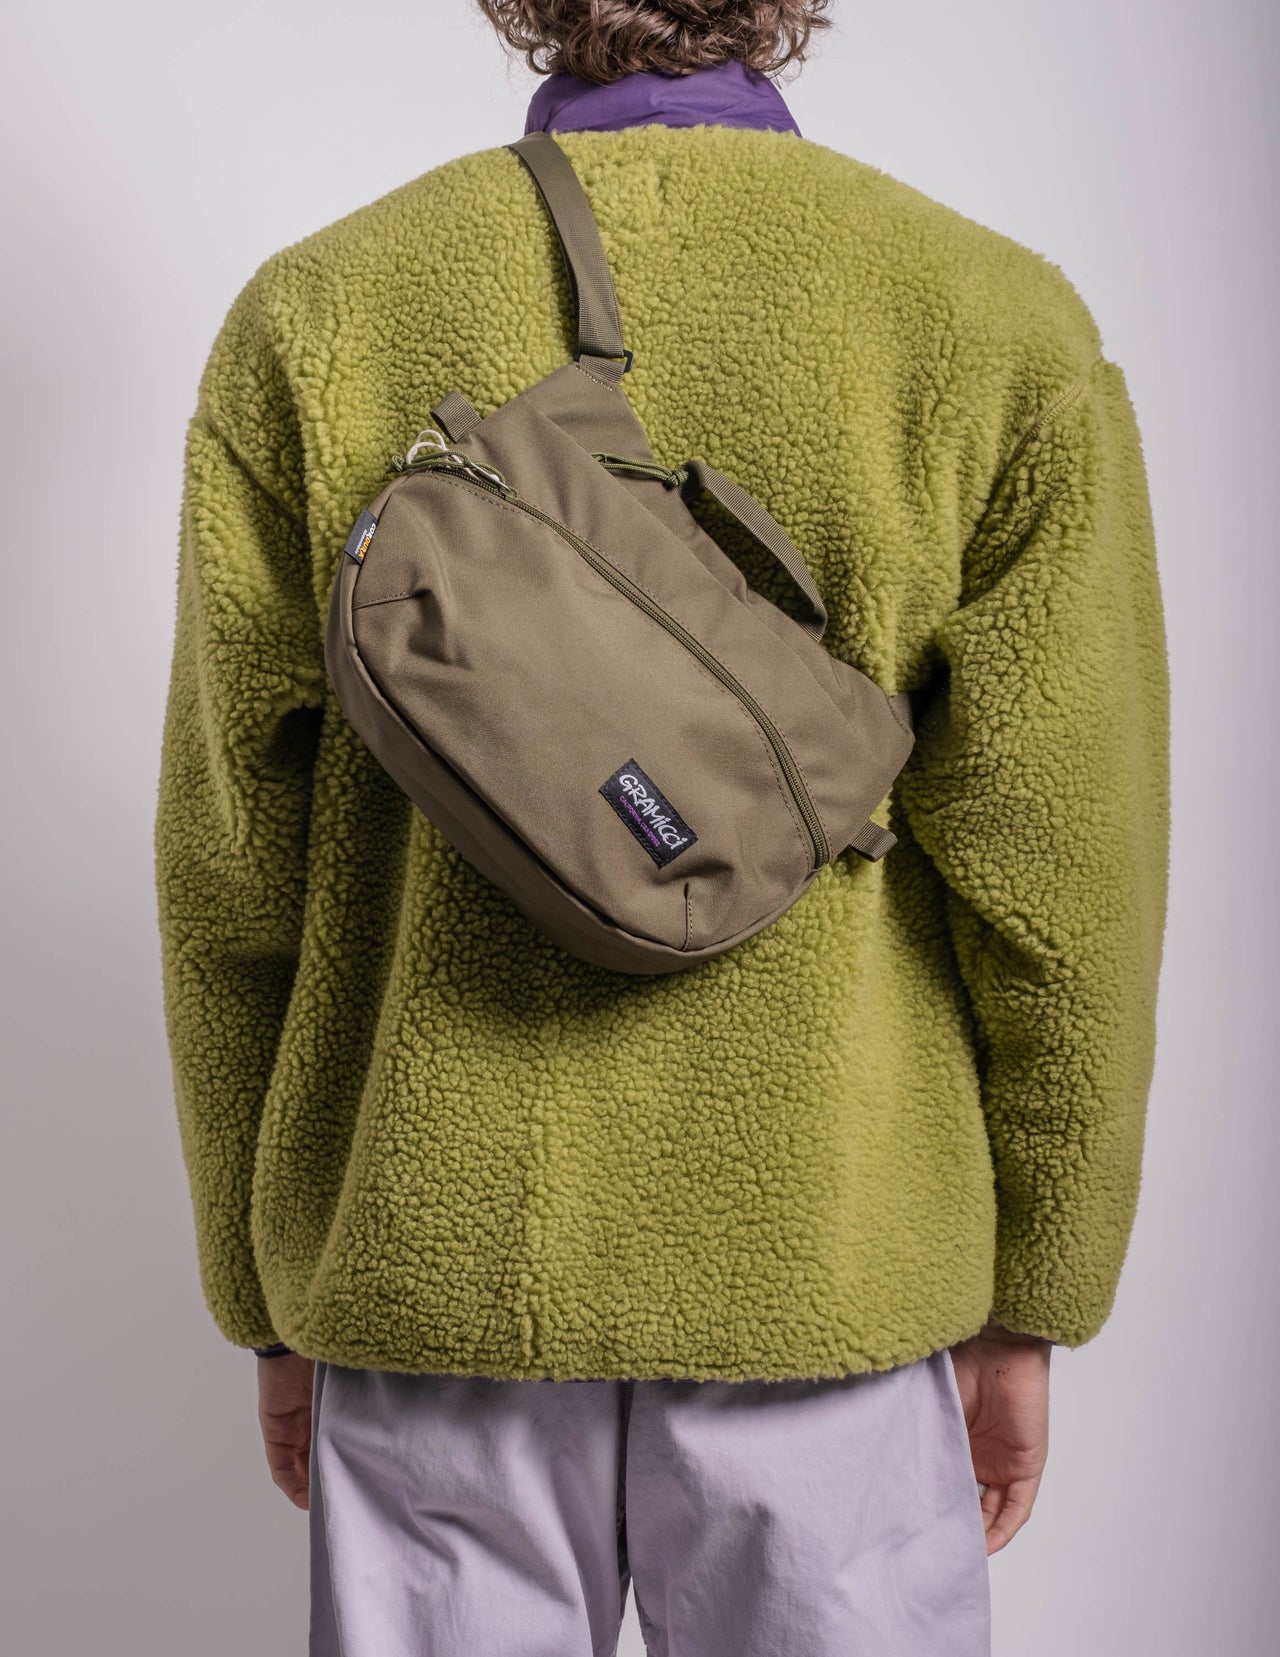 Cordura® Shoulder Bag in Ripple Green